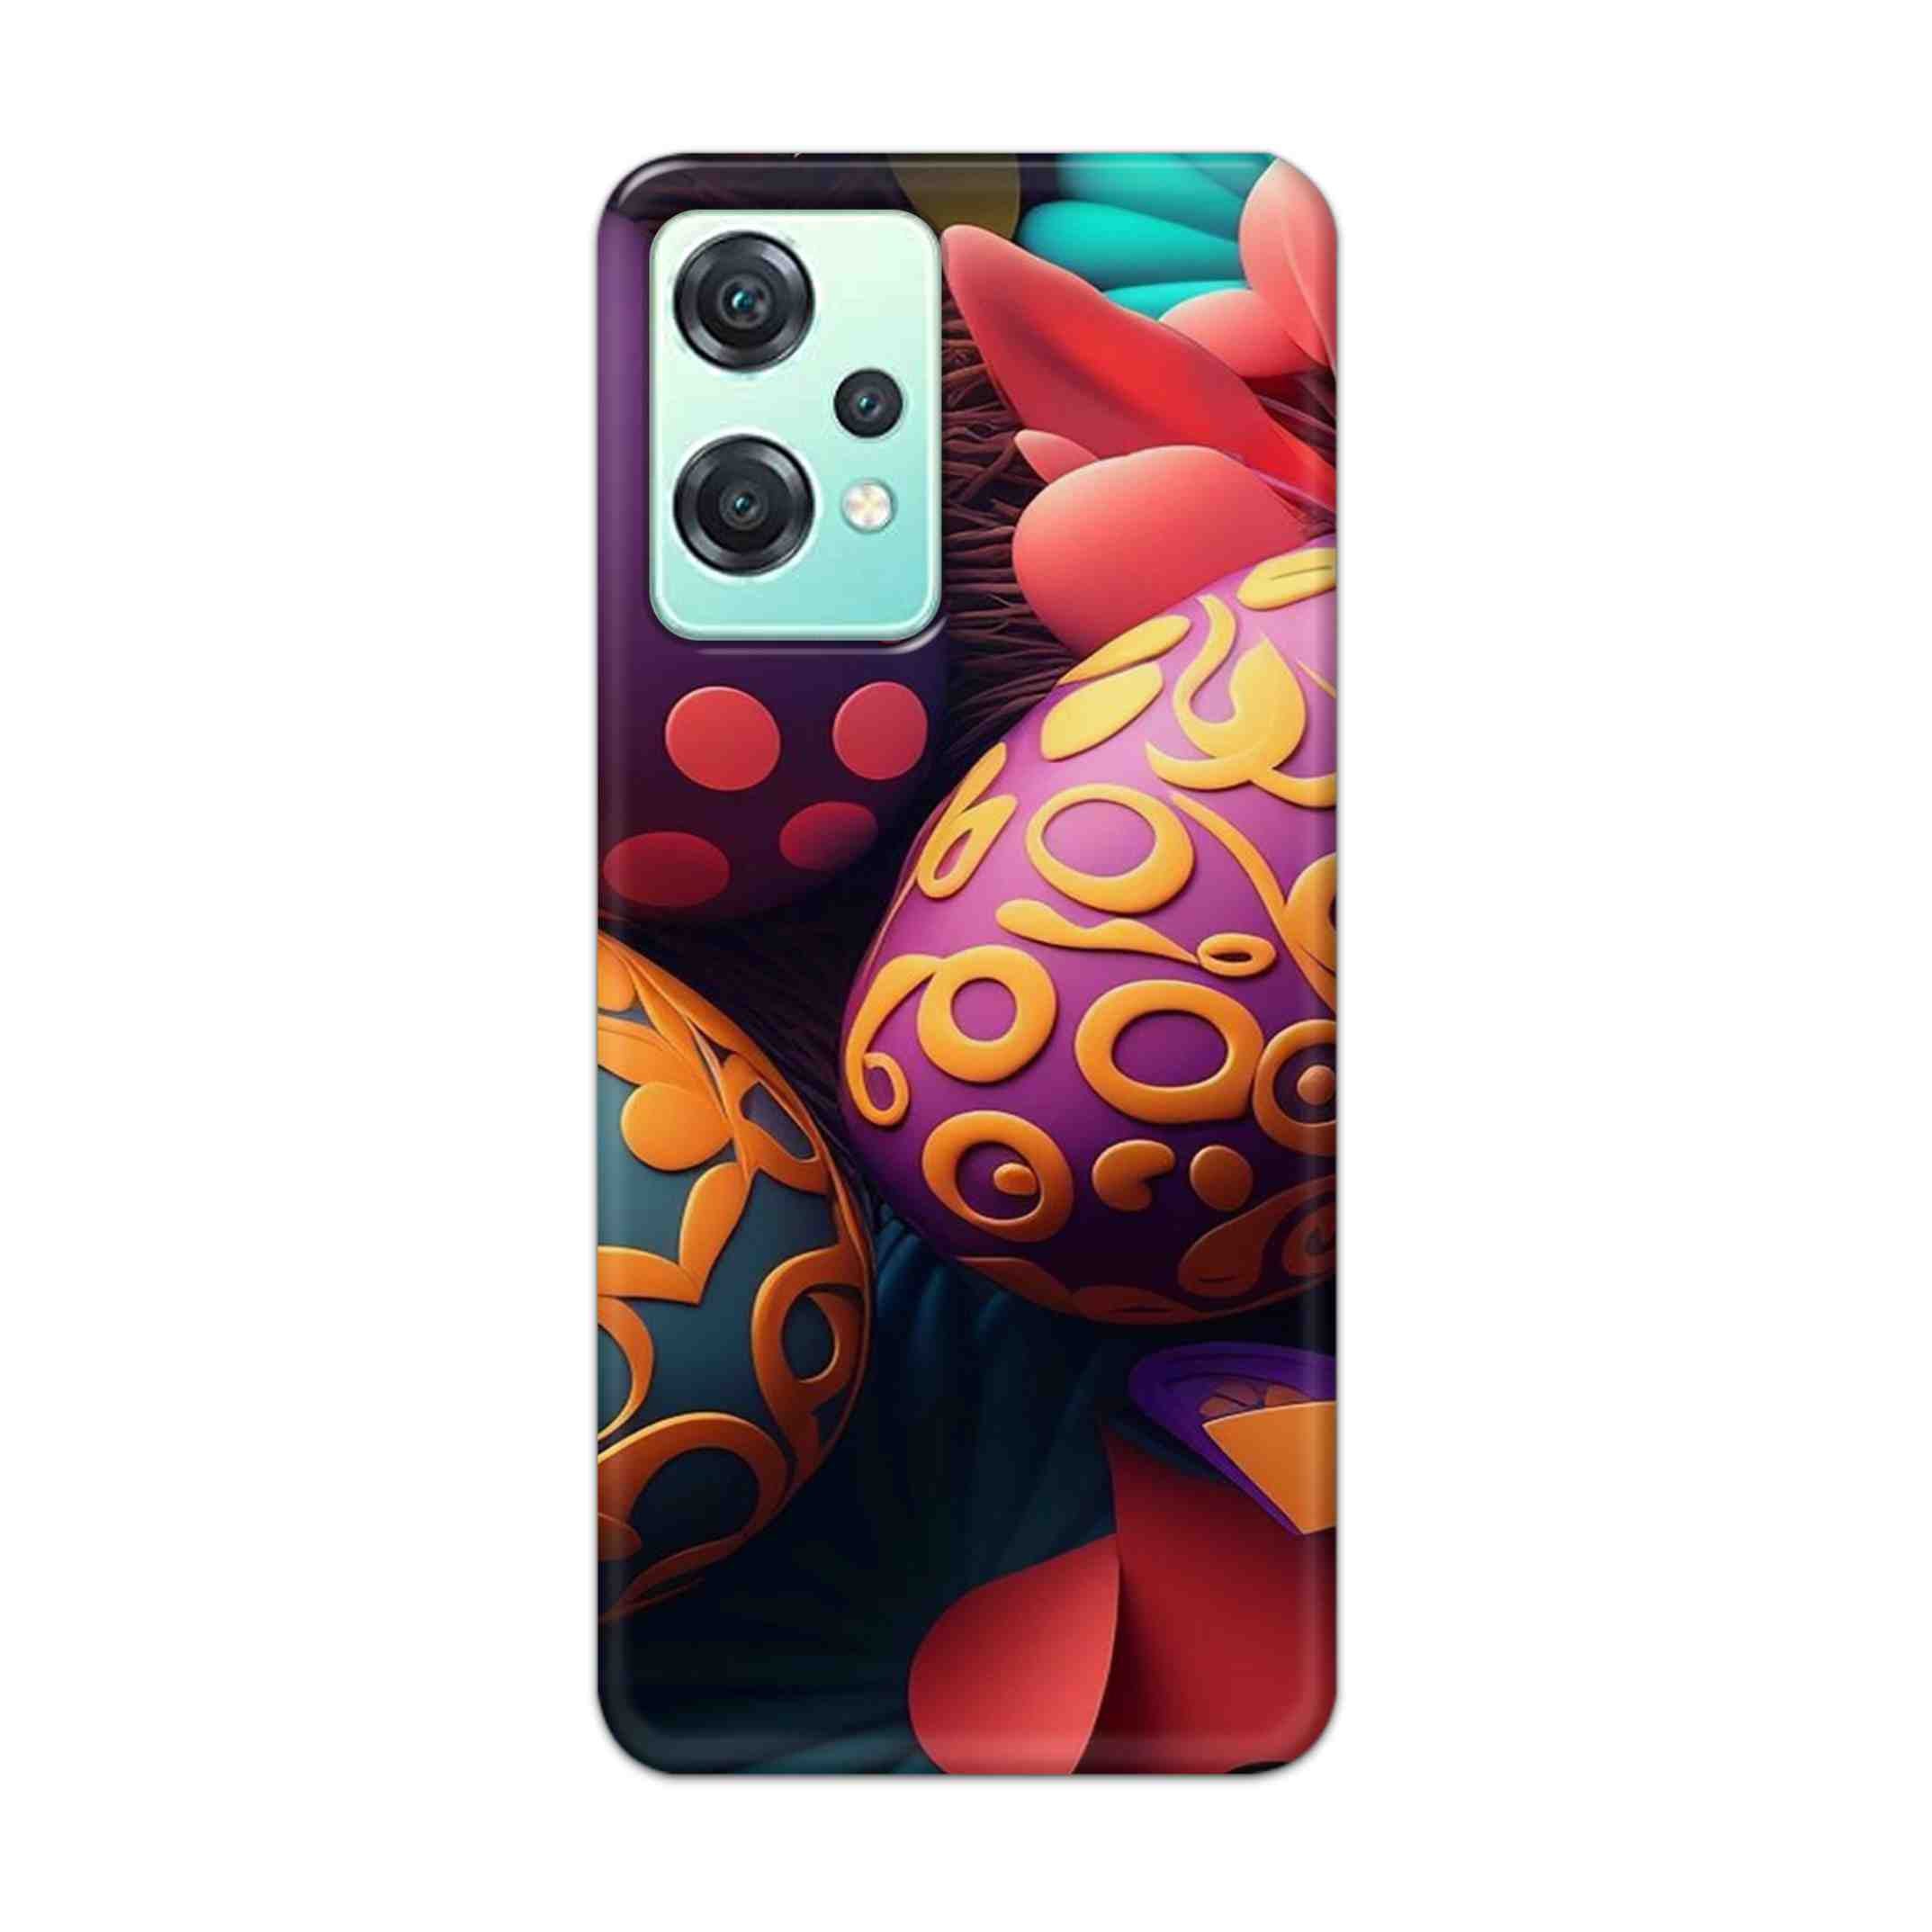 Buy Easter Egg Hard Back Mobile Phone Case Cover For OnePlus Nord CE 2 Lite 5G Online